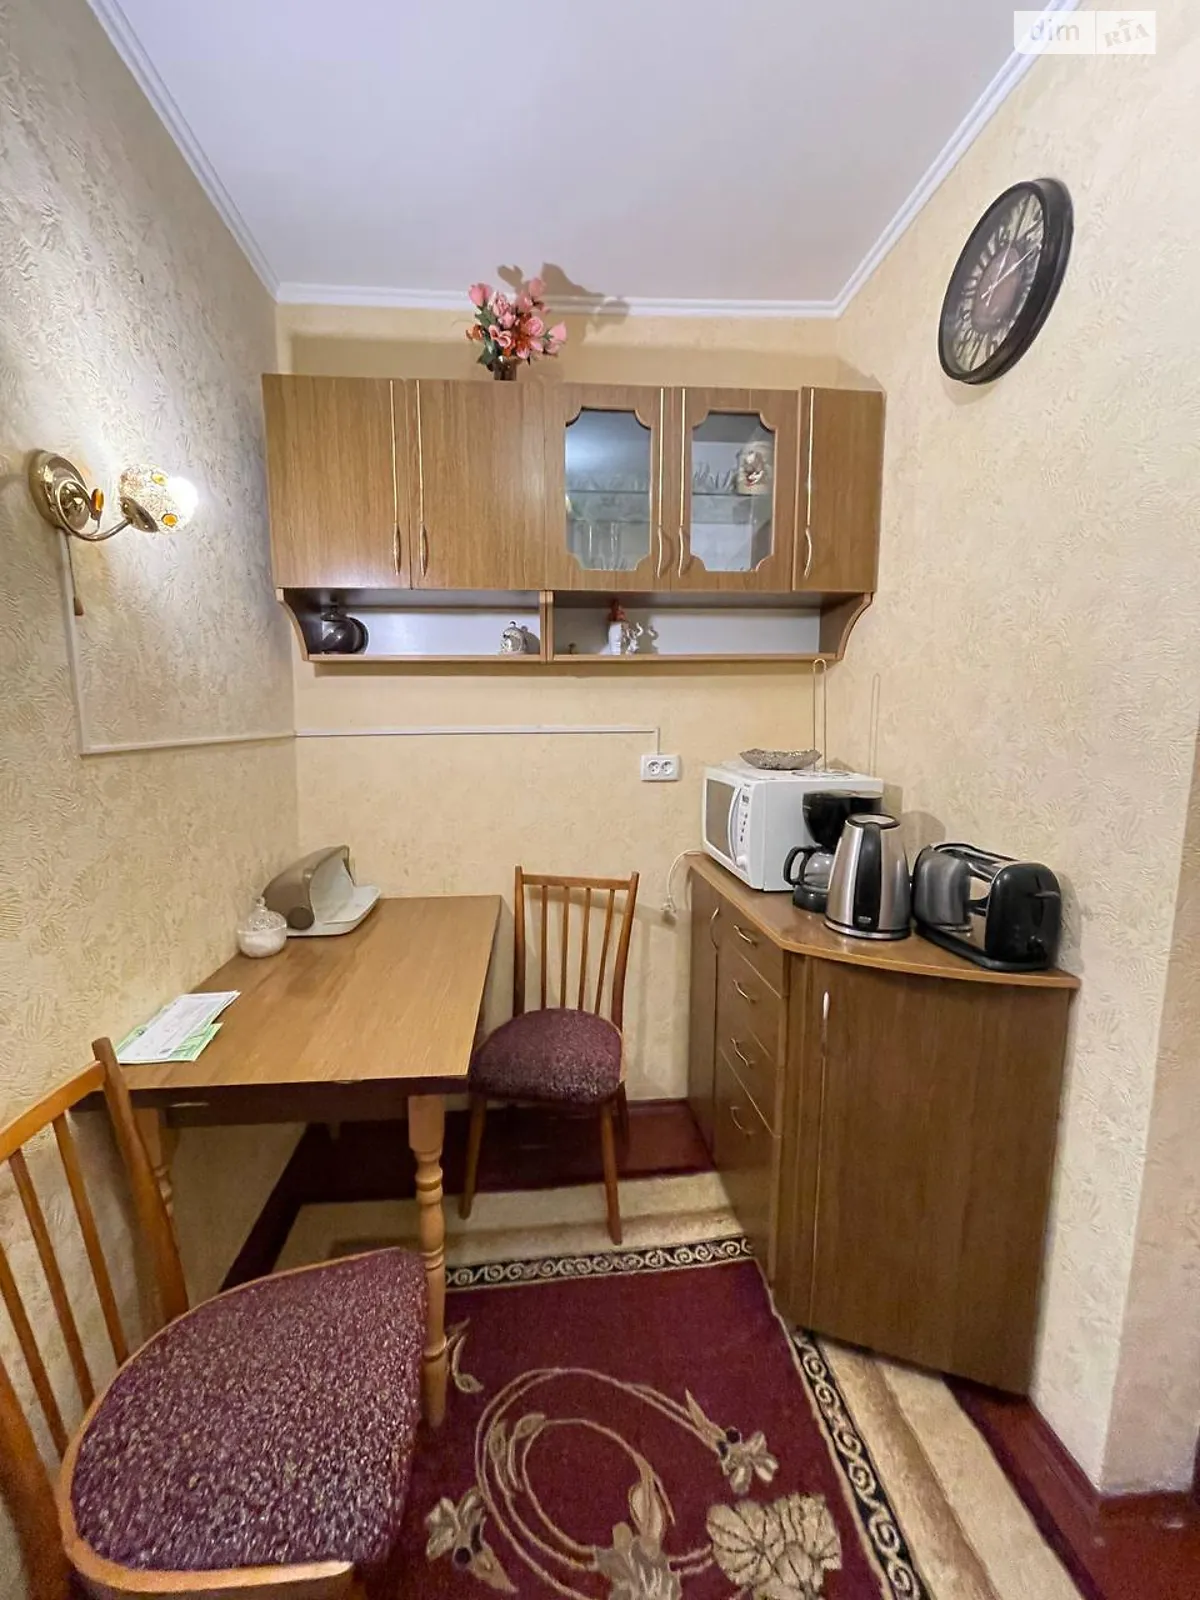 Продается комната 20 кв. м в Тернополе - фото 3